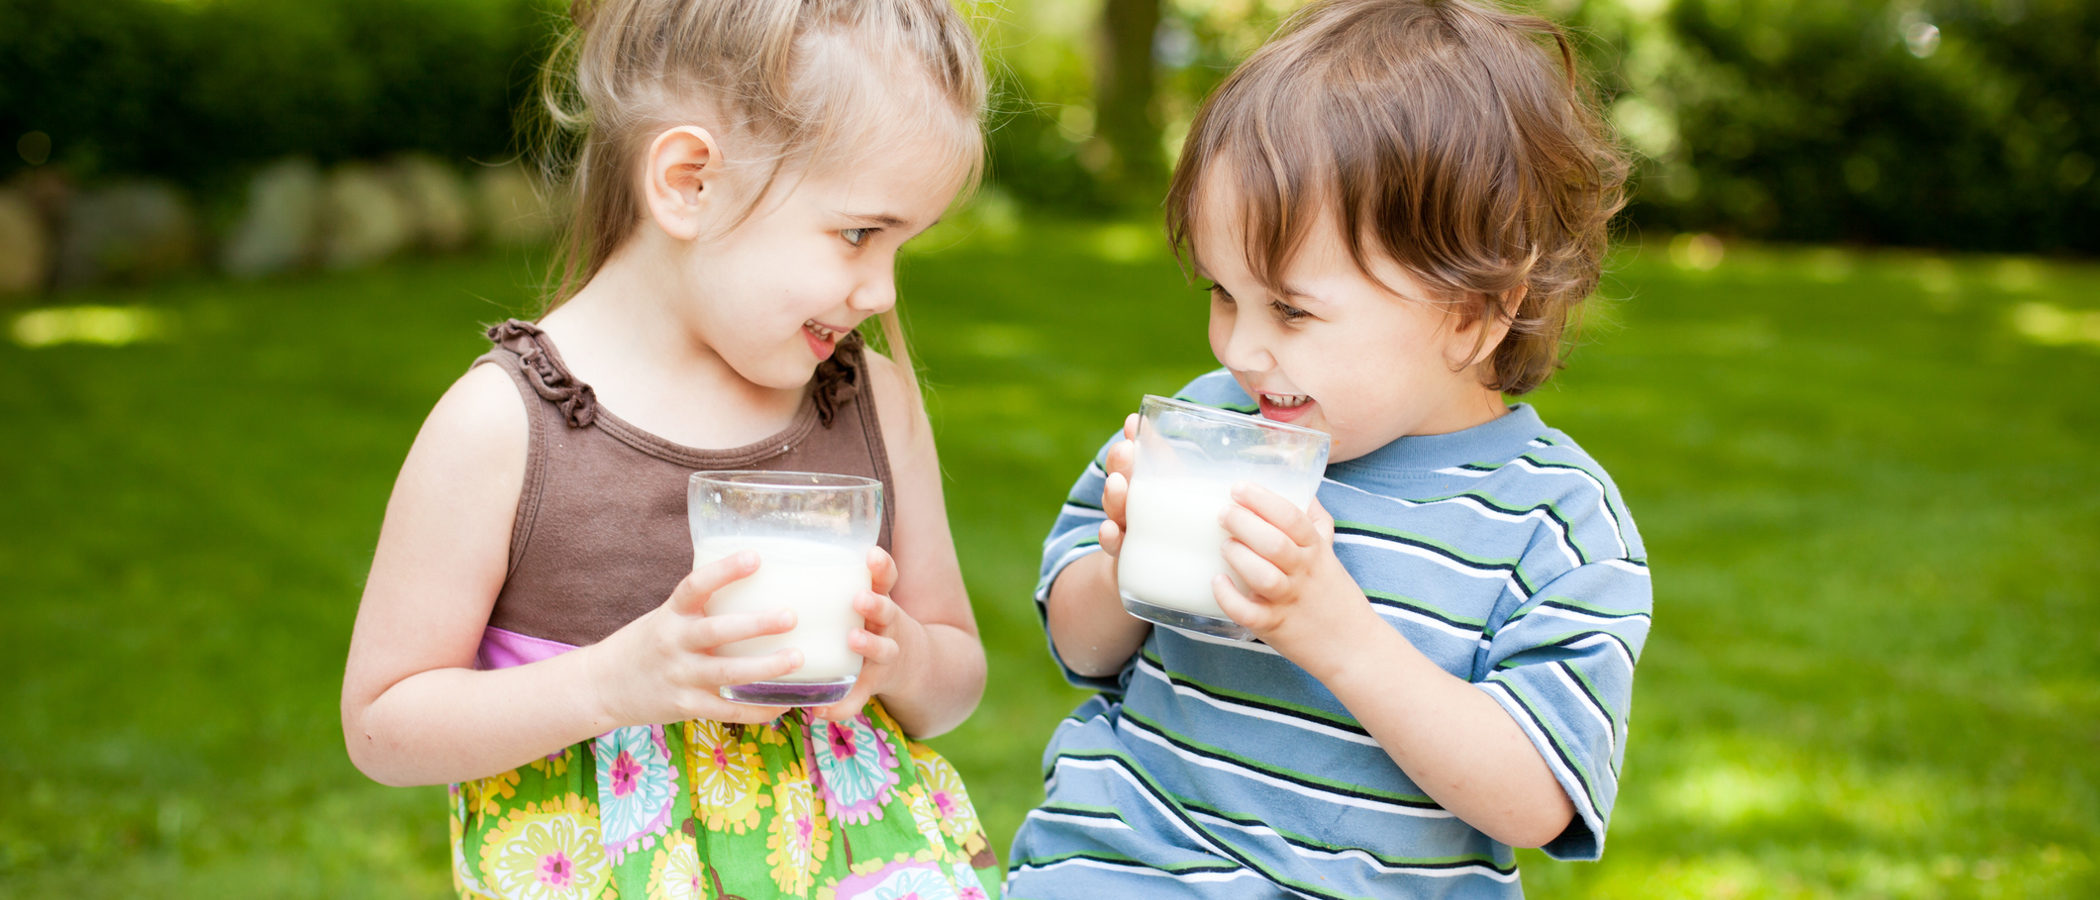 La leche en la dieta de los niños